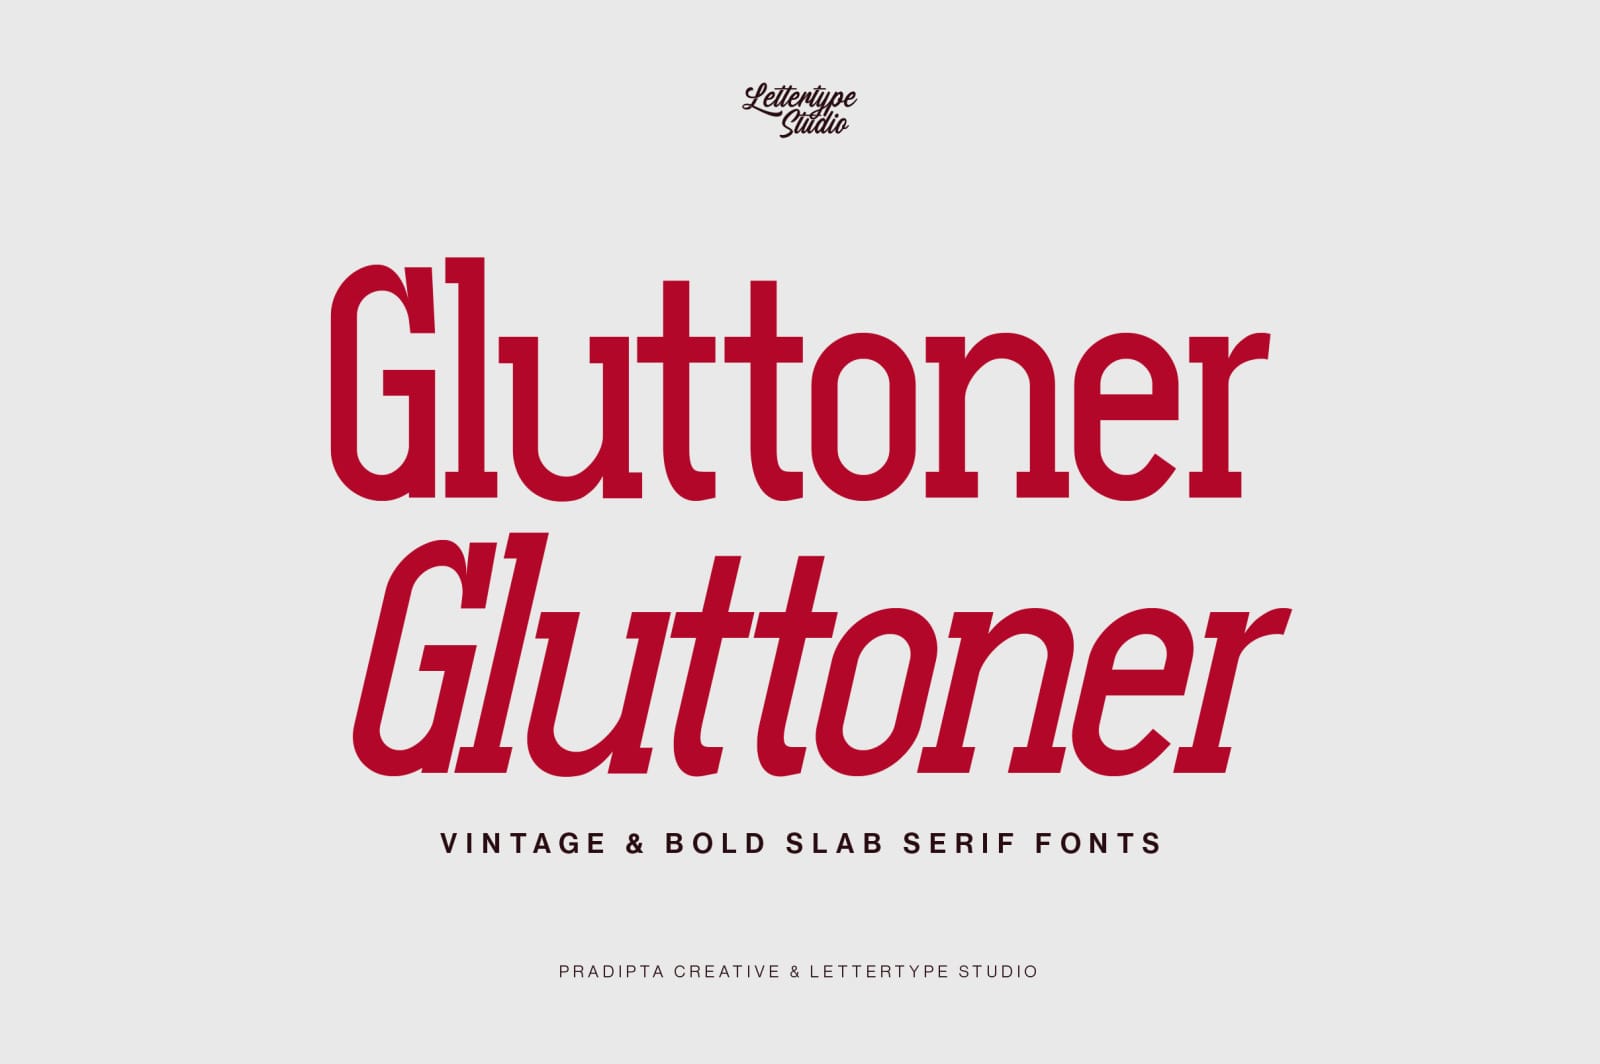 A vintage and bold slab serif fonts